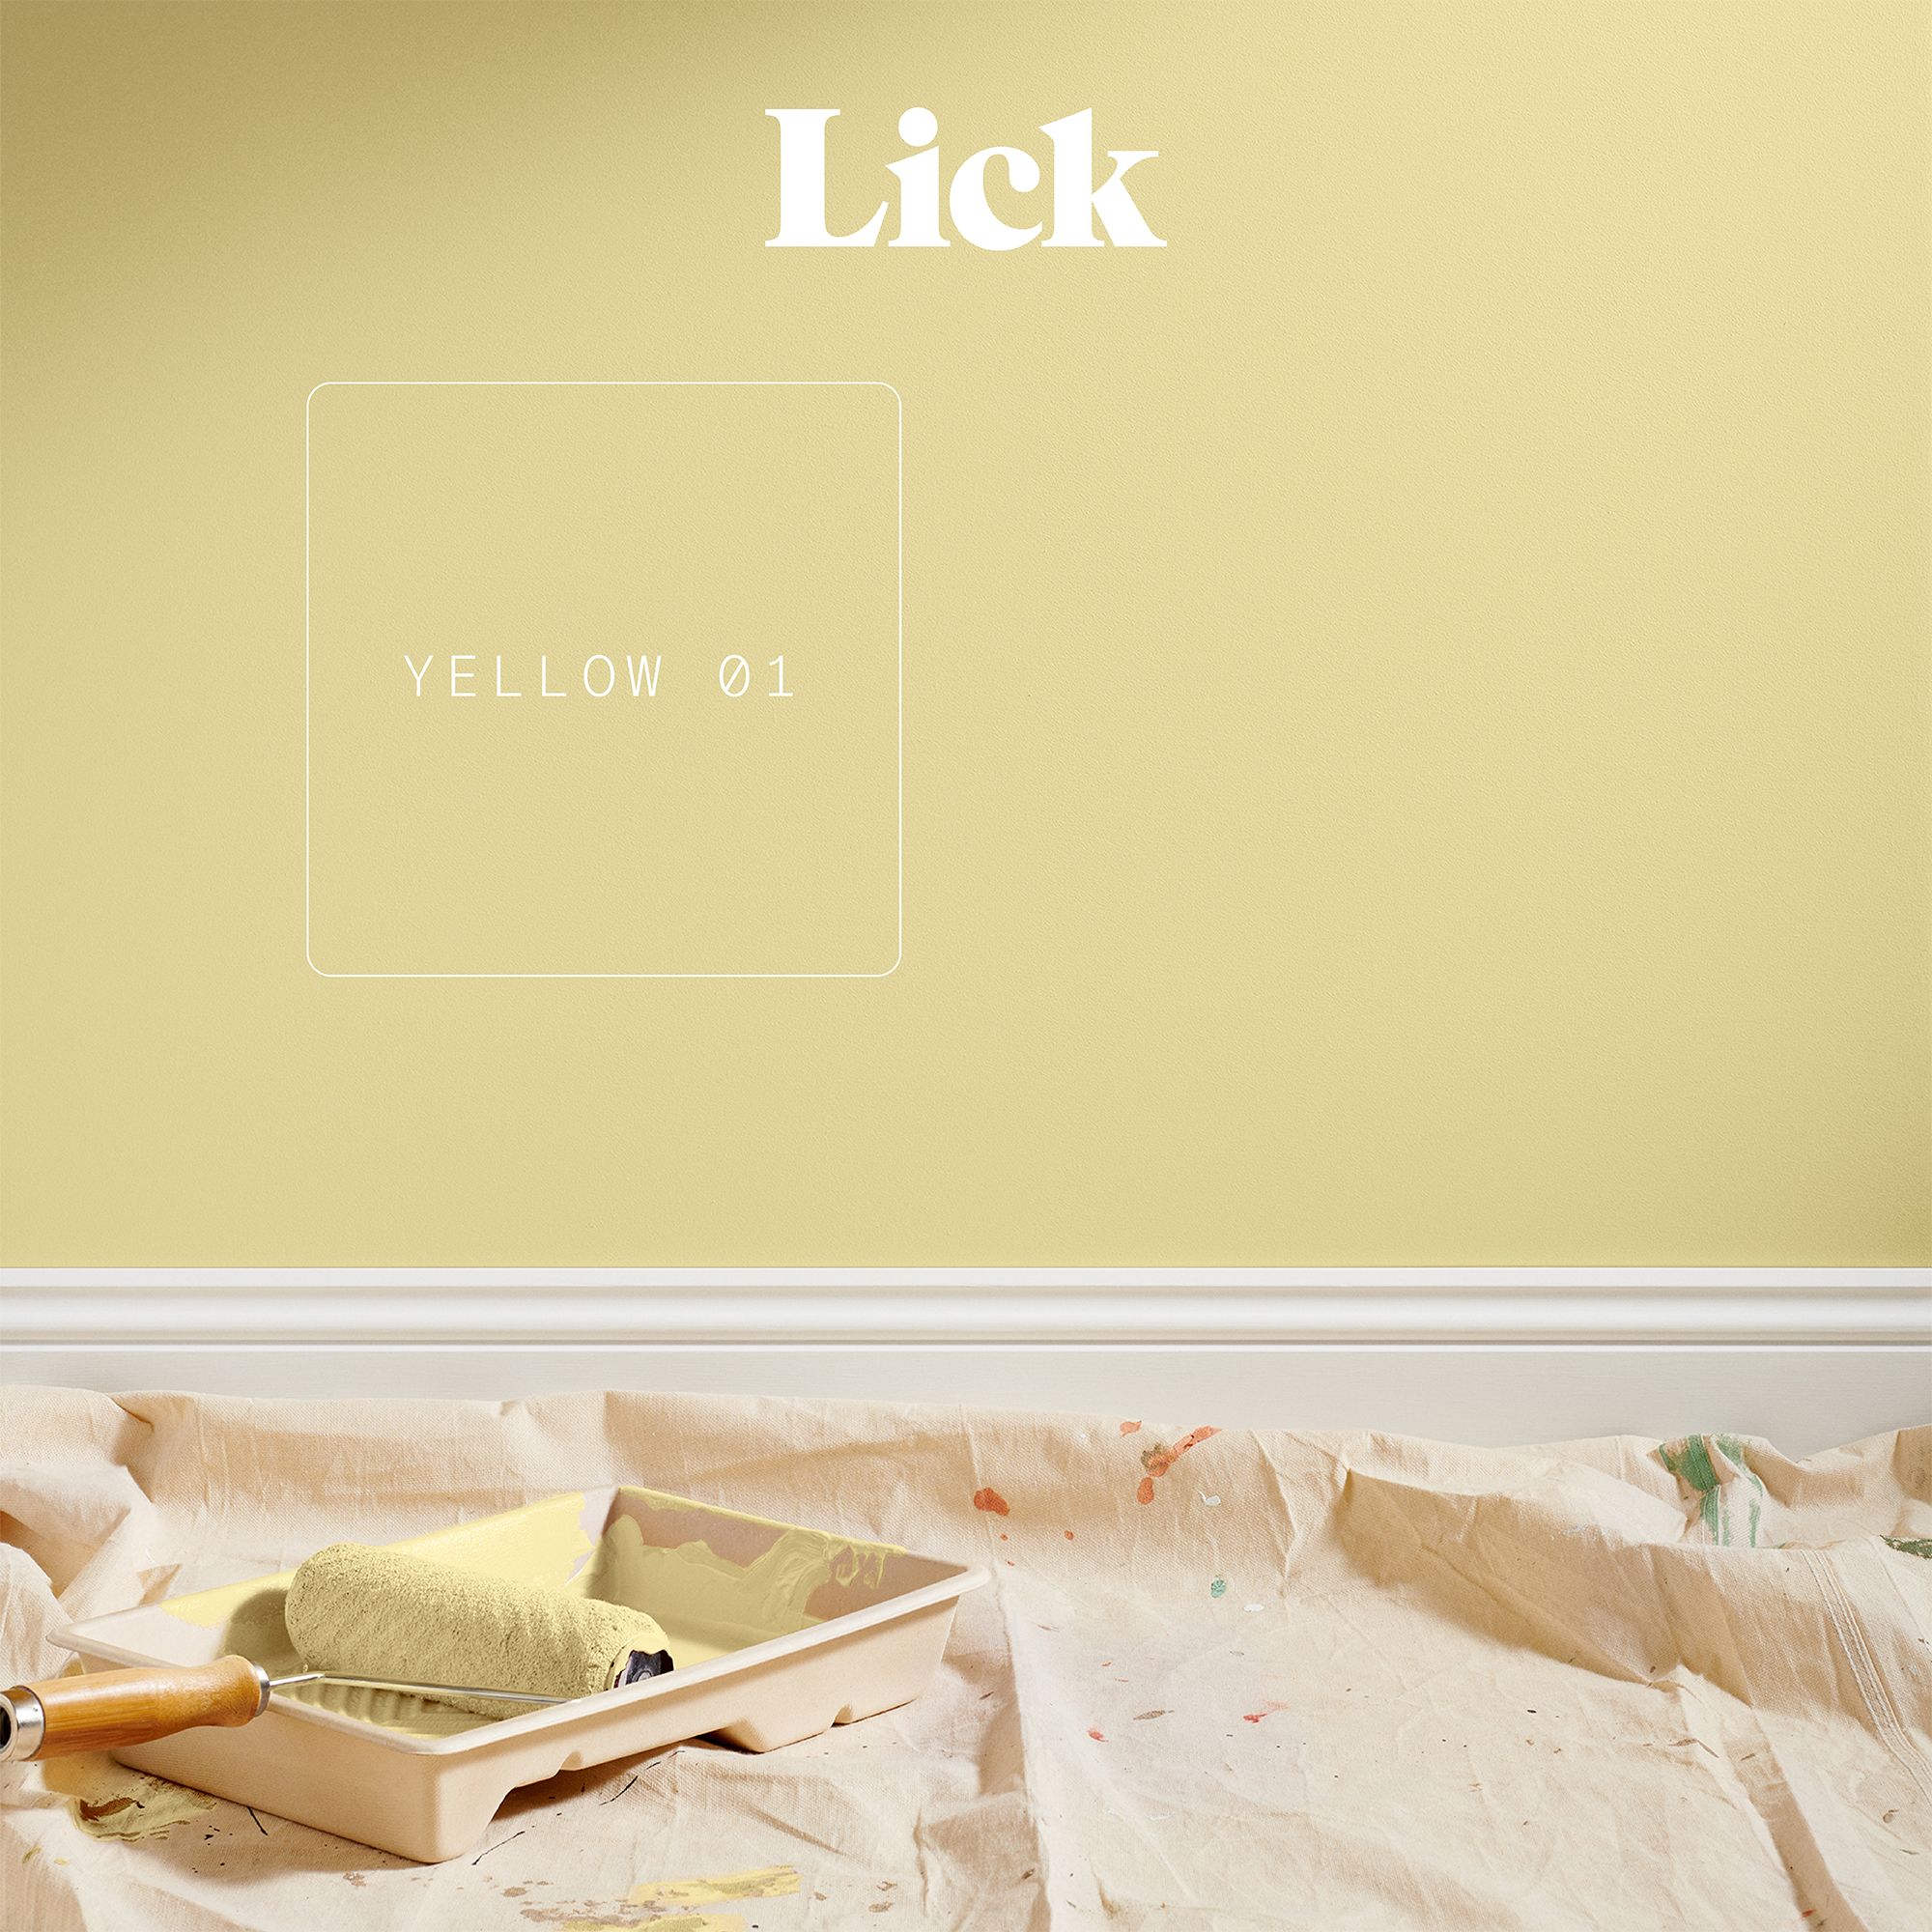 Lick Yellow 01 Peel & stick Tester